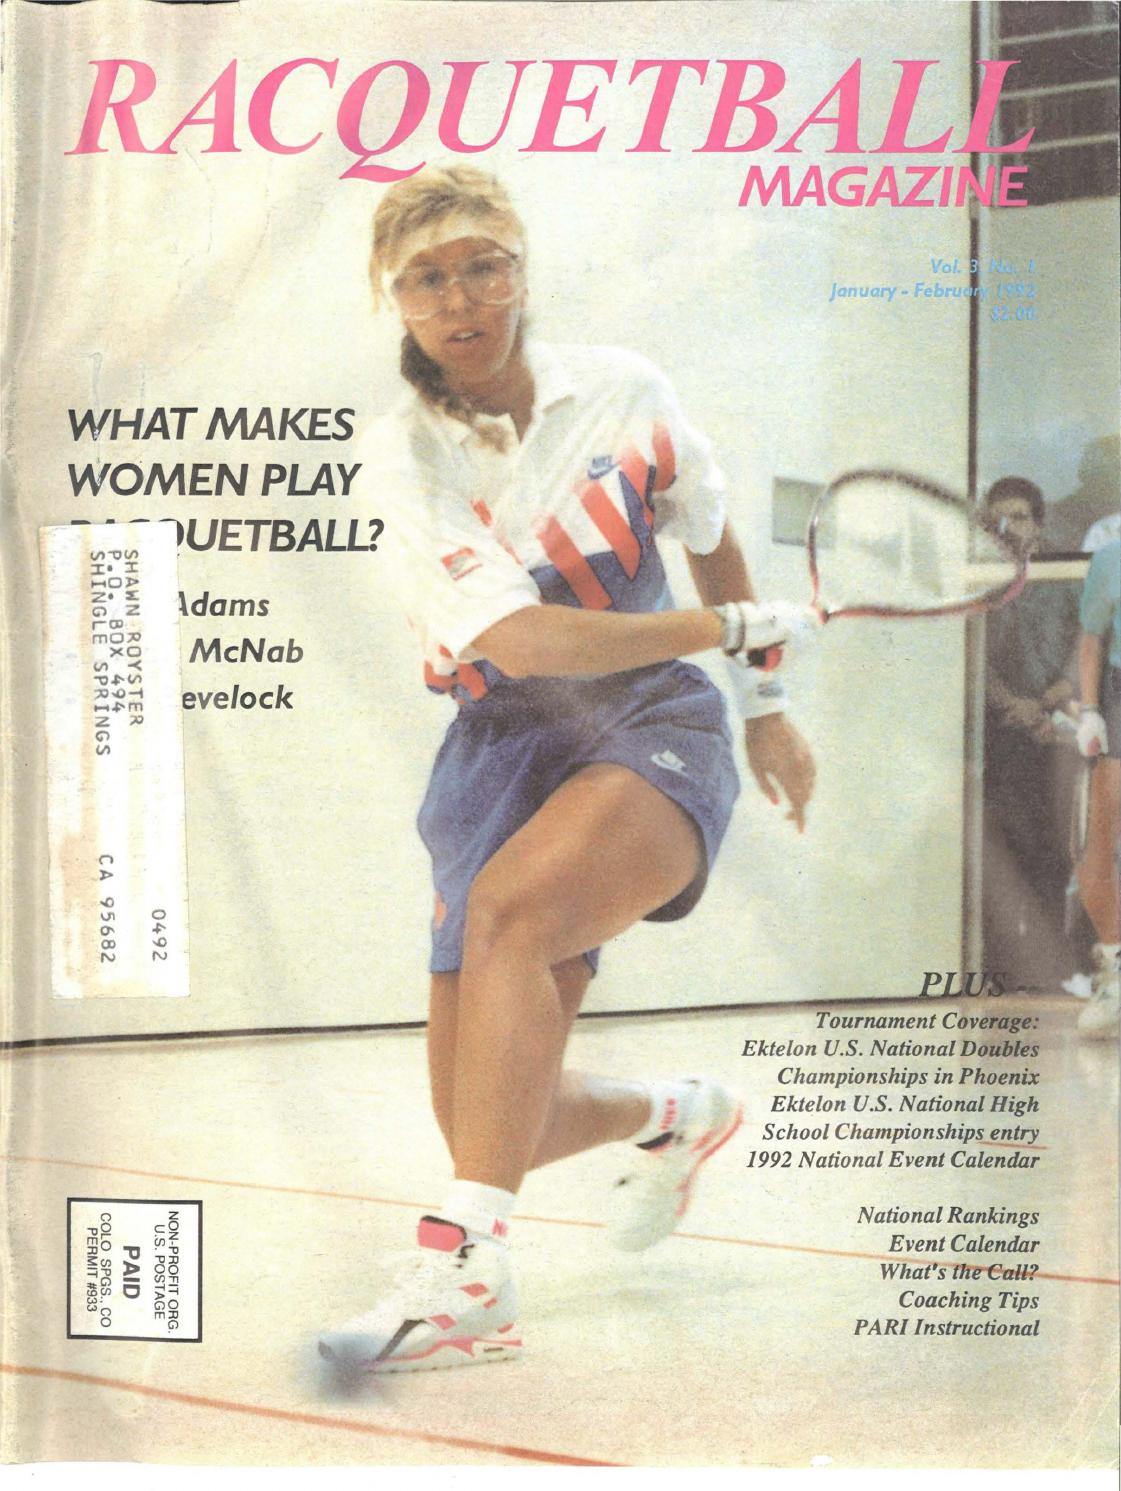 Racquetball Magazine, Jan/Feb 1992